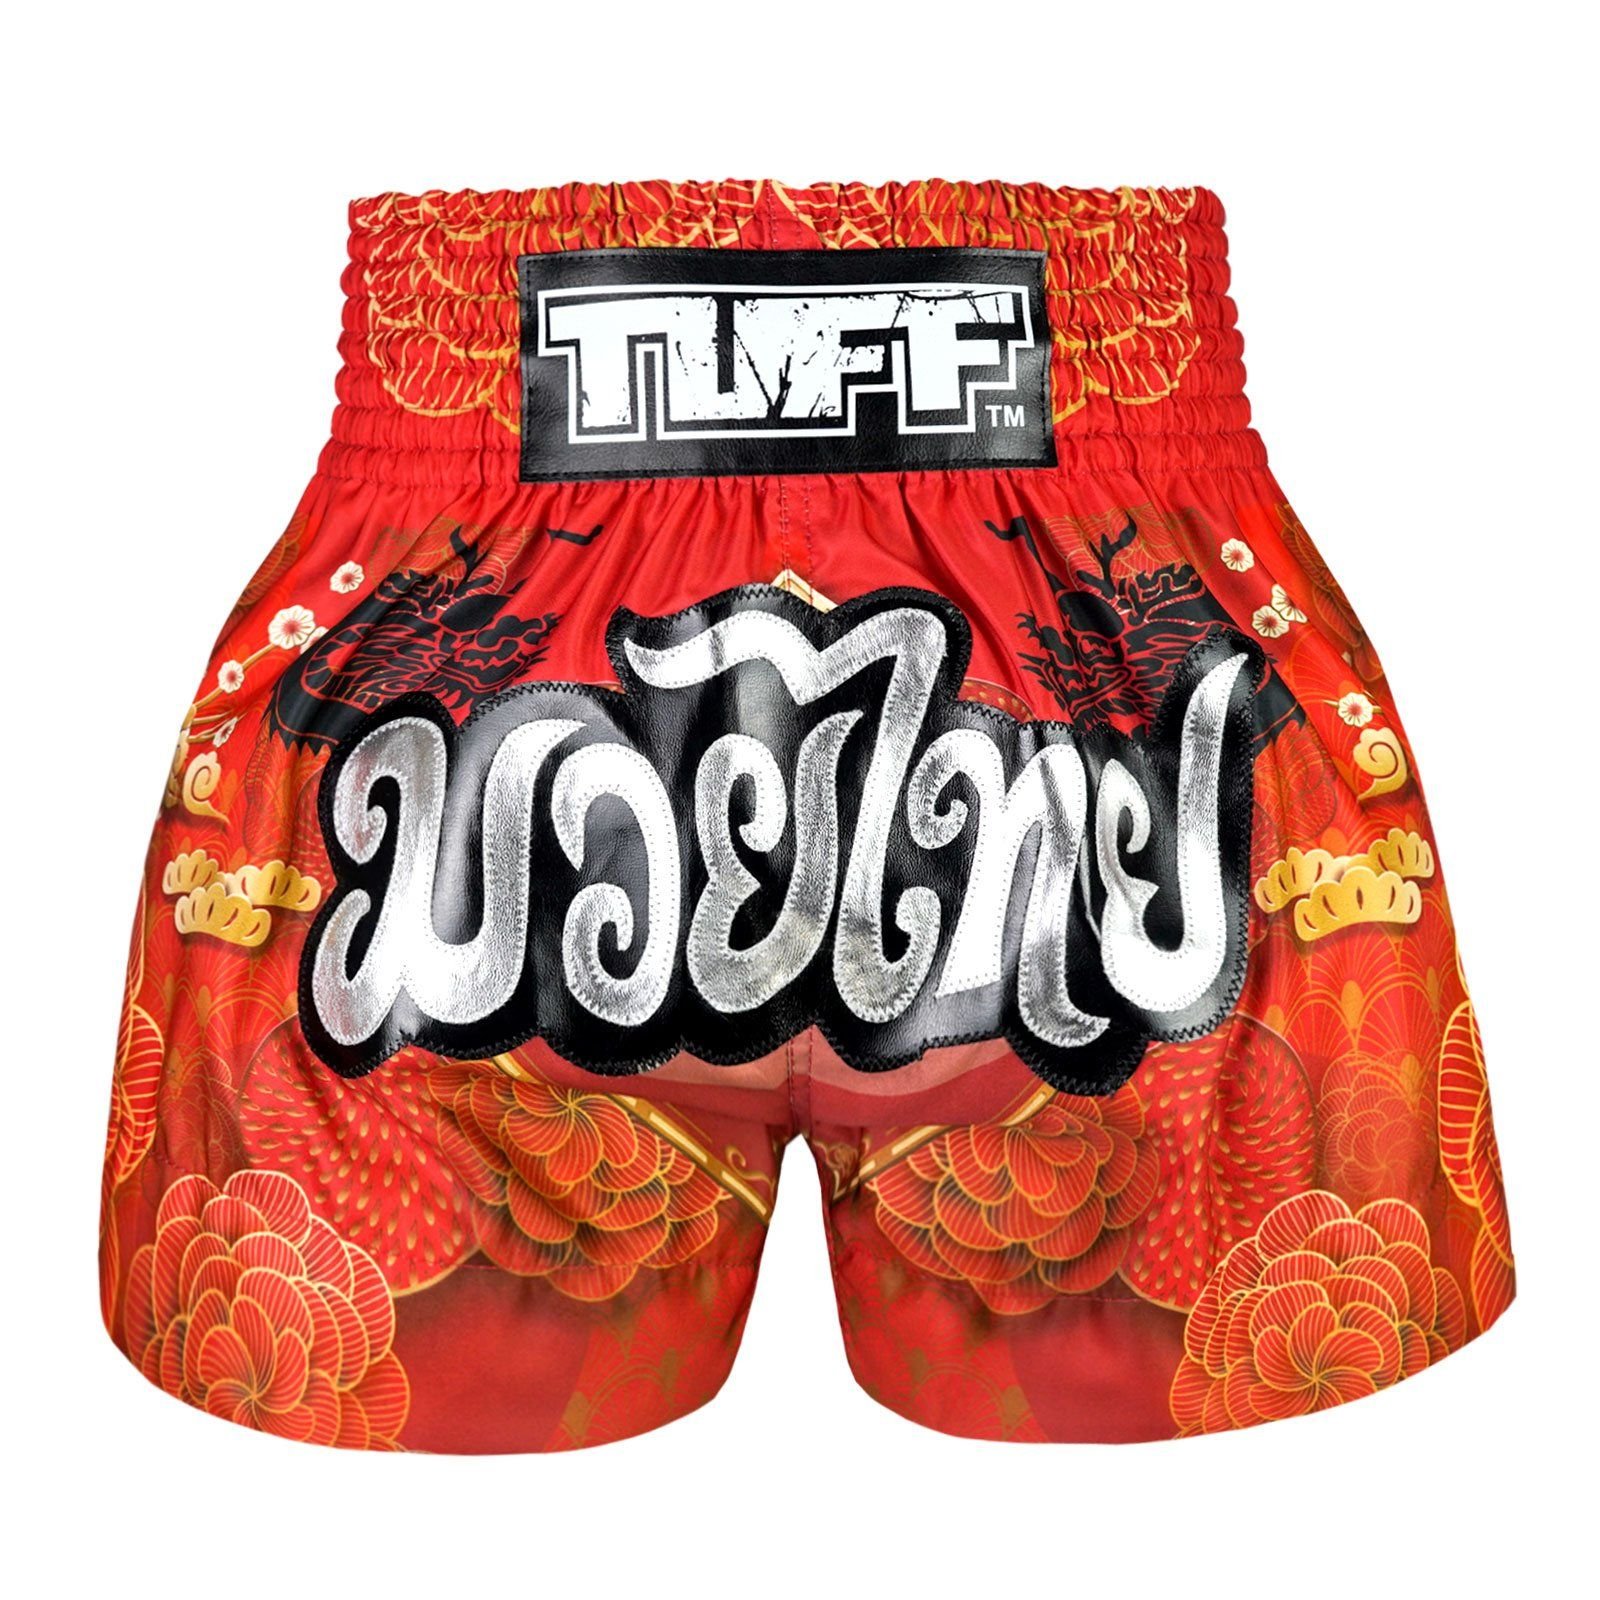 Quần TUFF Muay Thai Boxing Shorts The Legendary